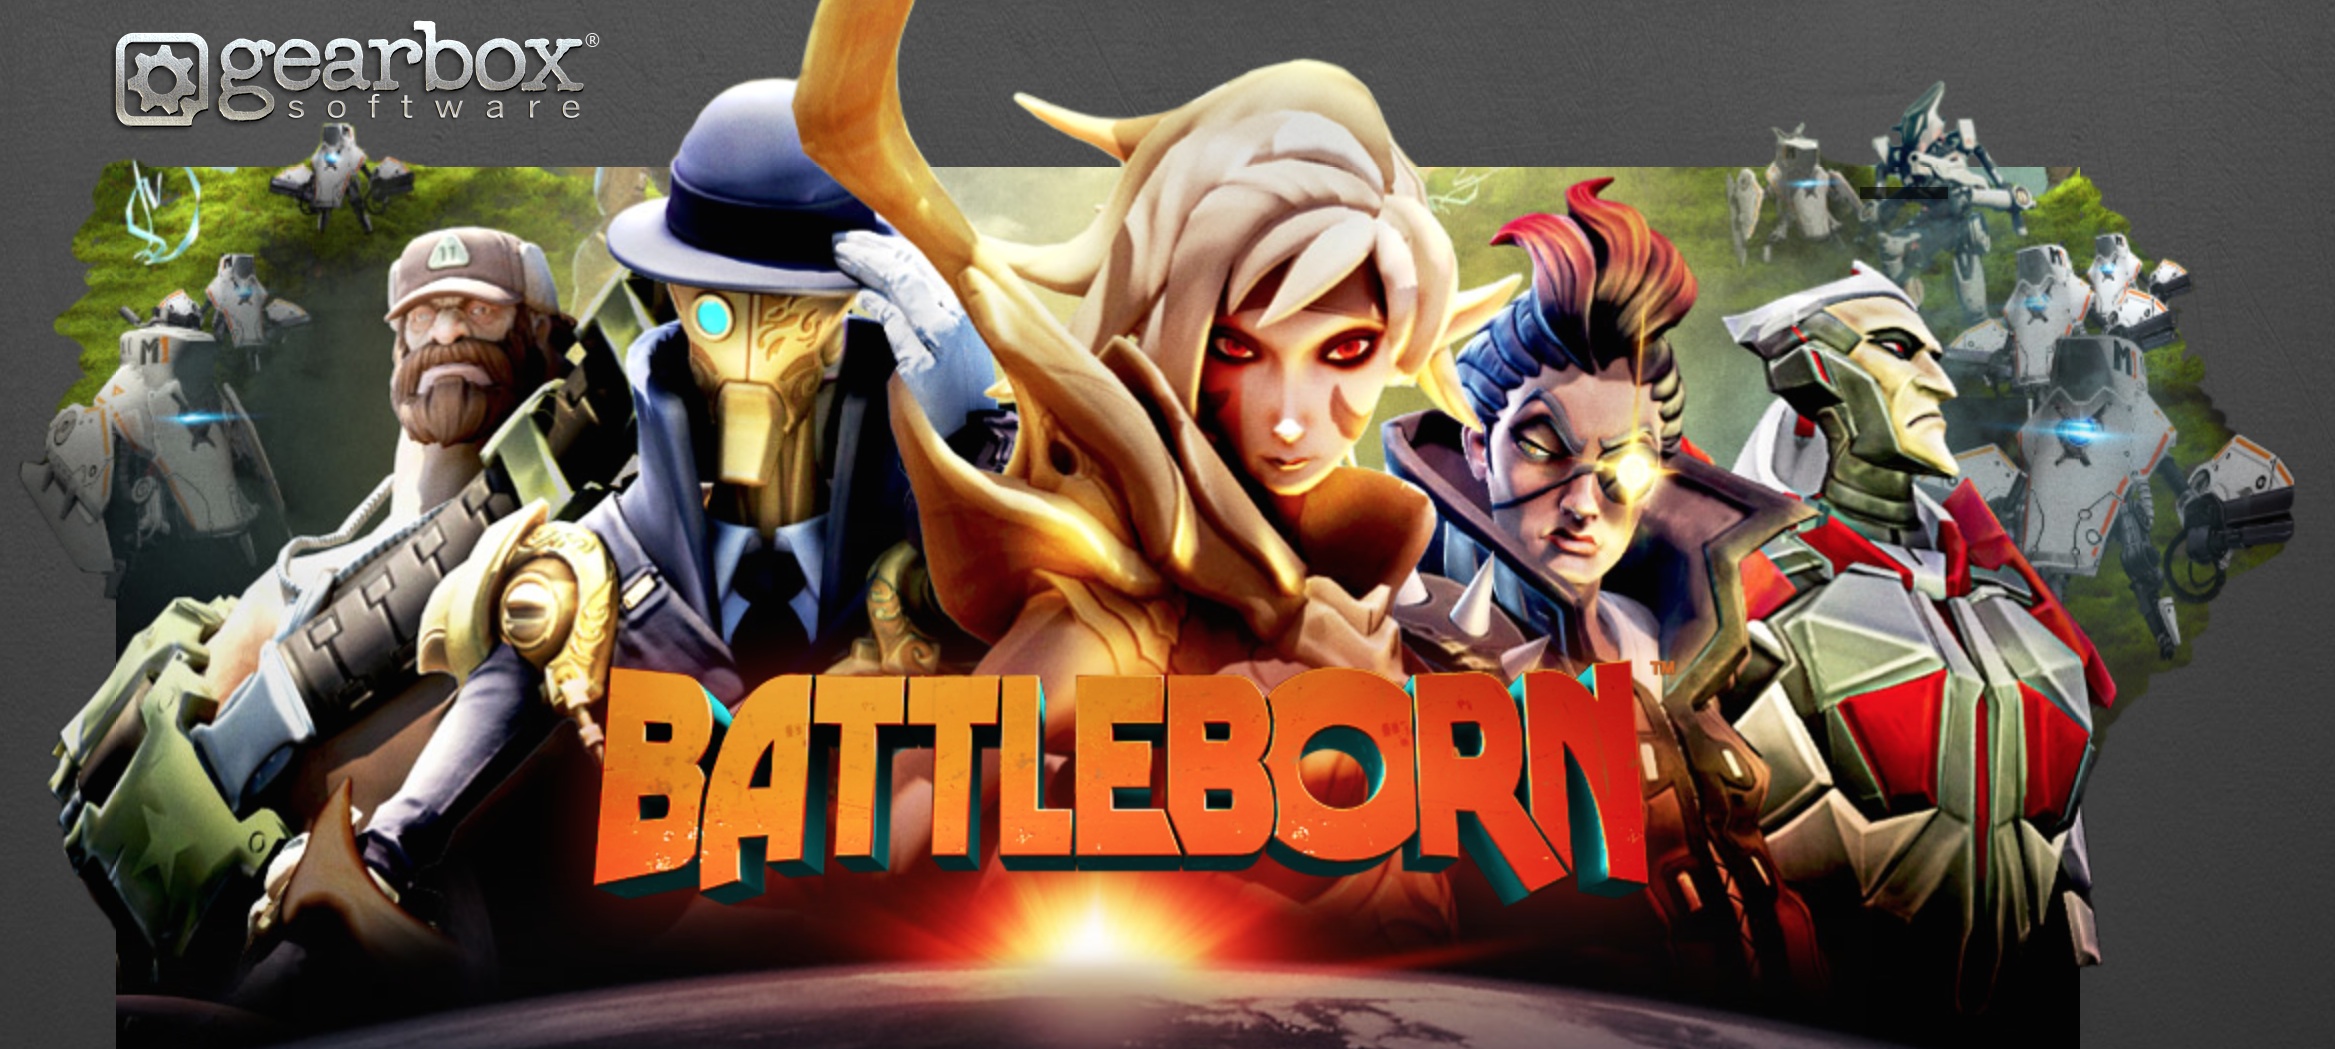 Battleborn Gearbox Software